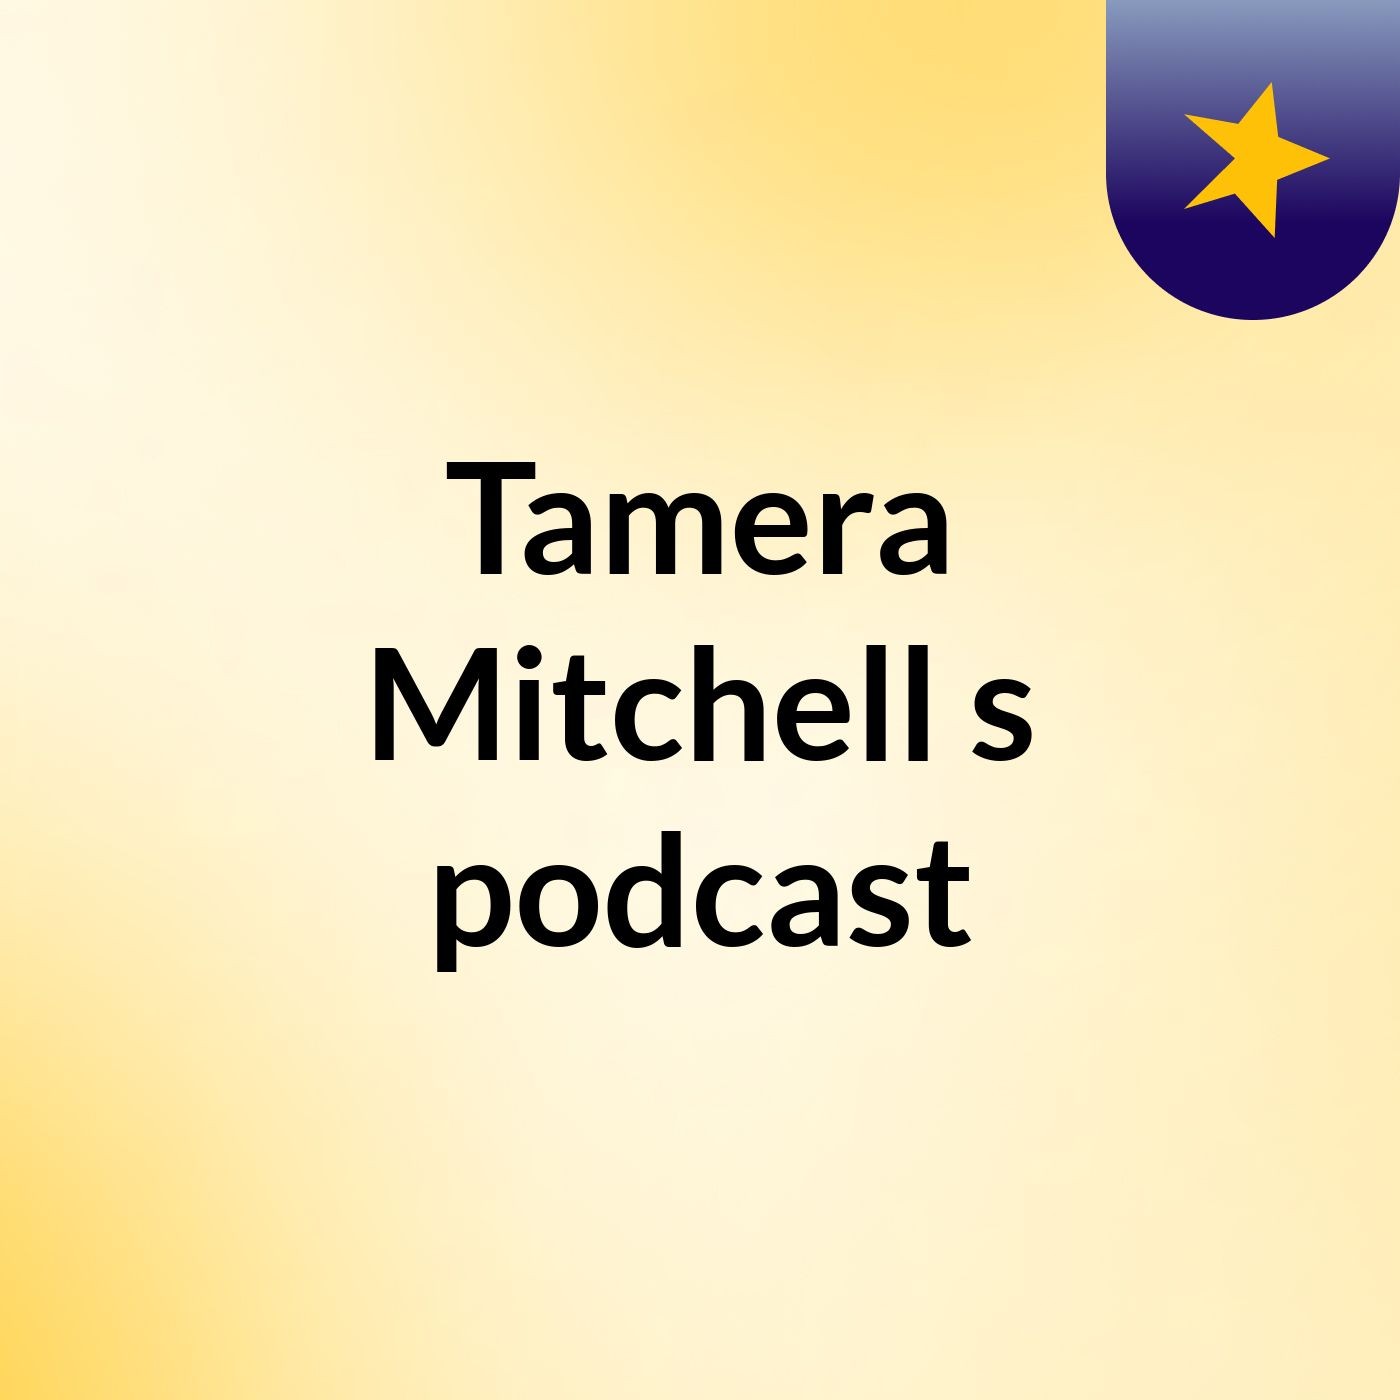 Tamera Mitchell's podcast